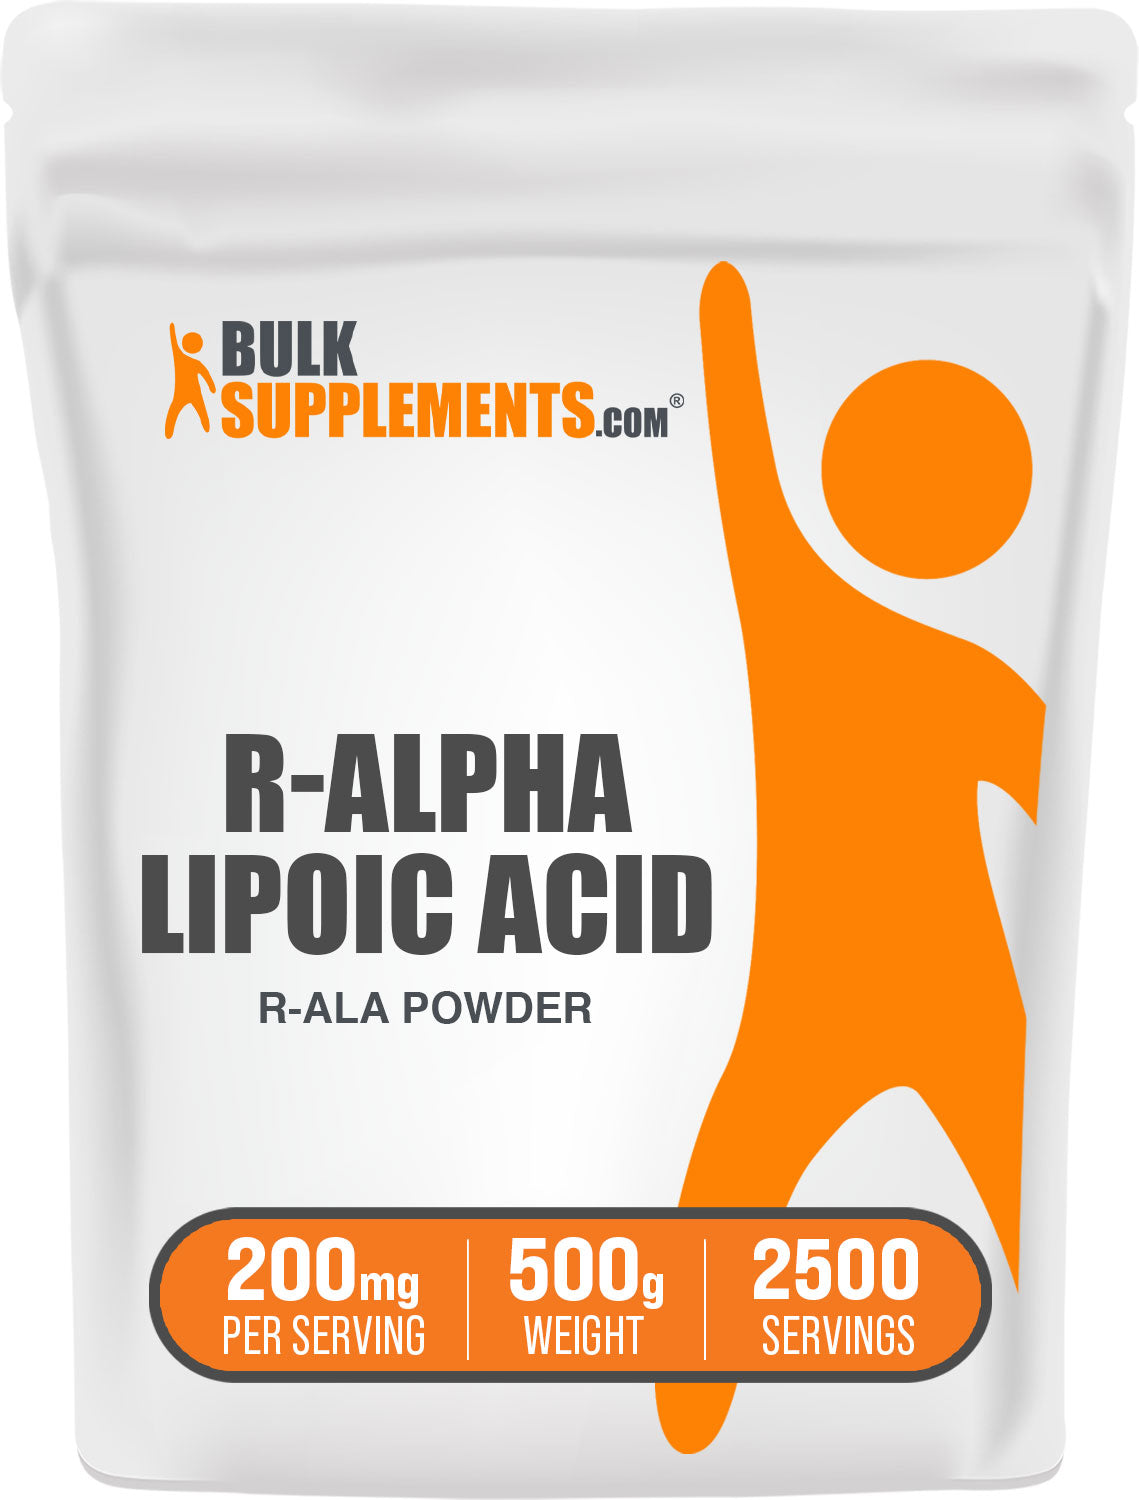 BulkSupplements R-Alpha Lipoic Acid Powder R-ALA 500g bag